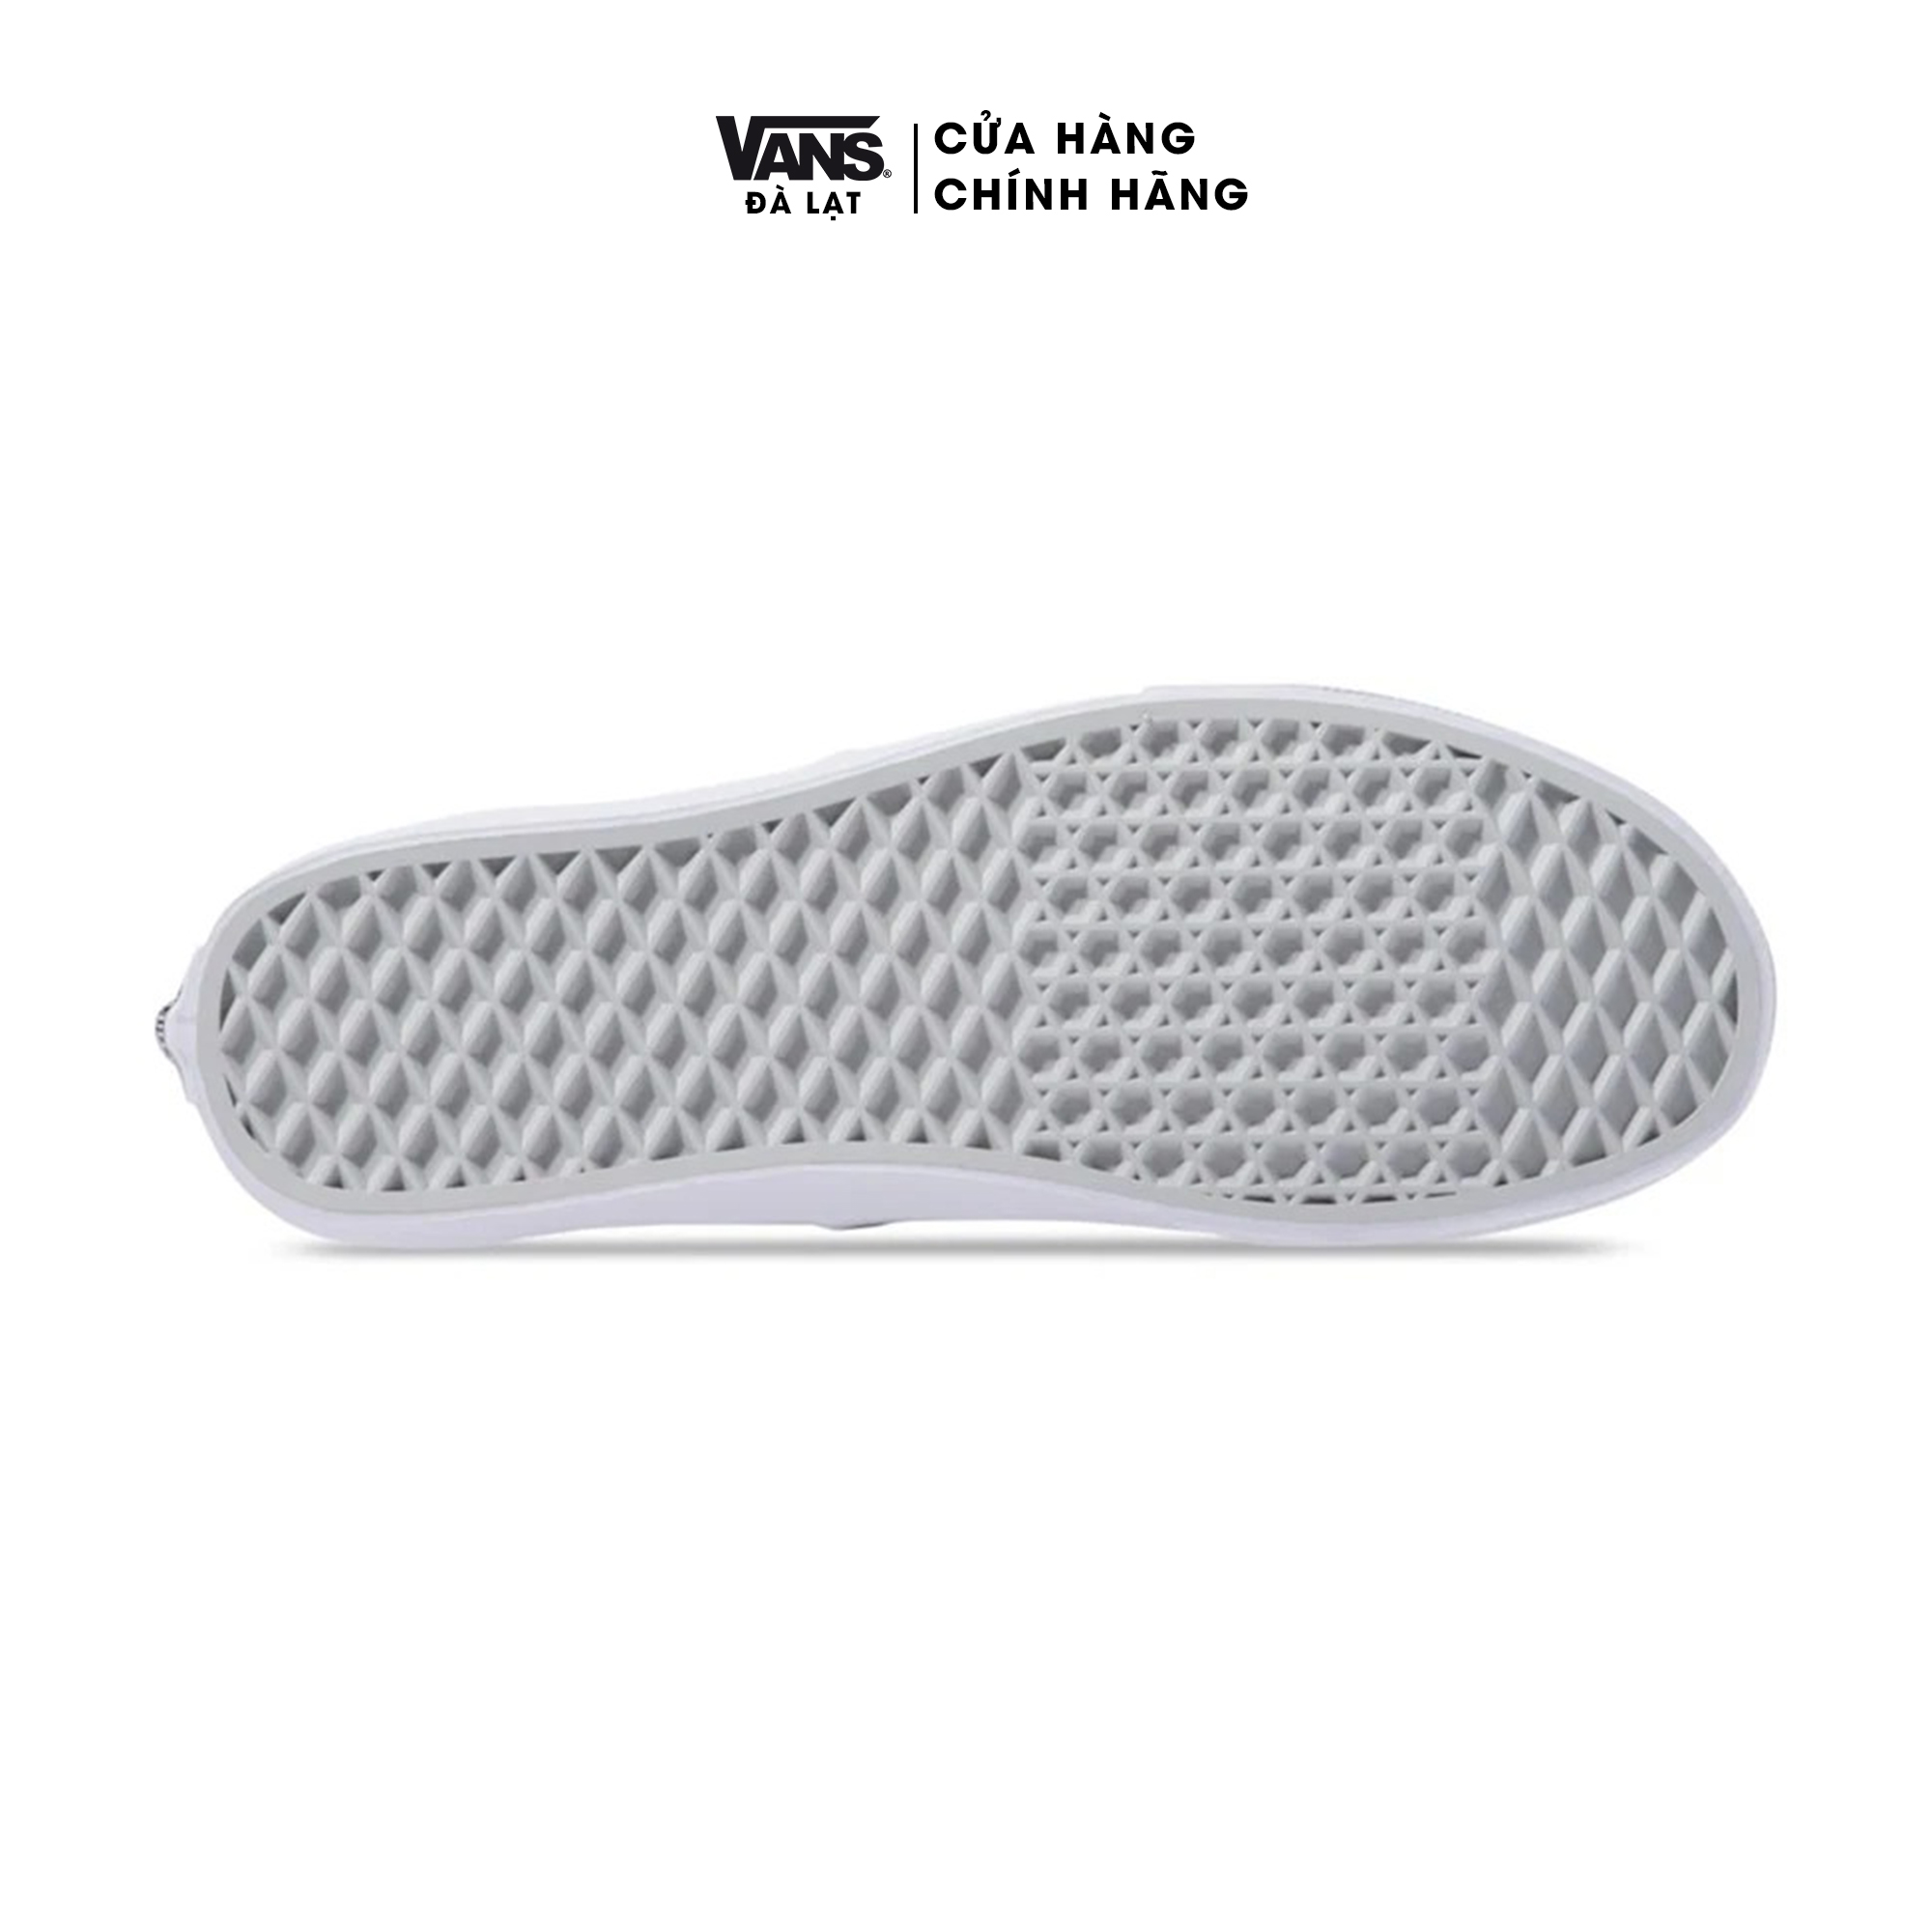 Giày sneakers Vans Unisex màu trắng - Vans Authentic White Canvas Low - VN000EE3W00